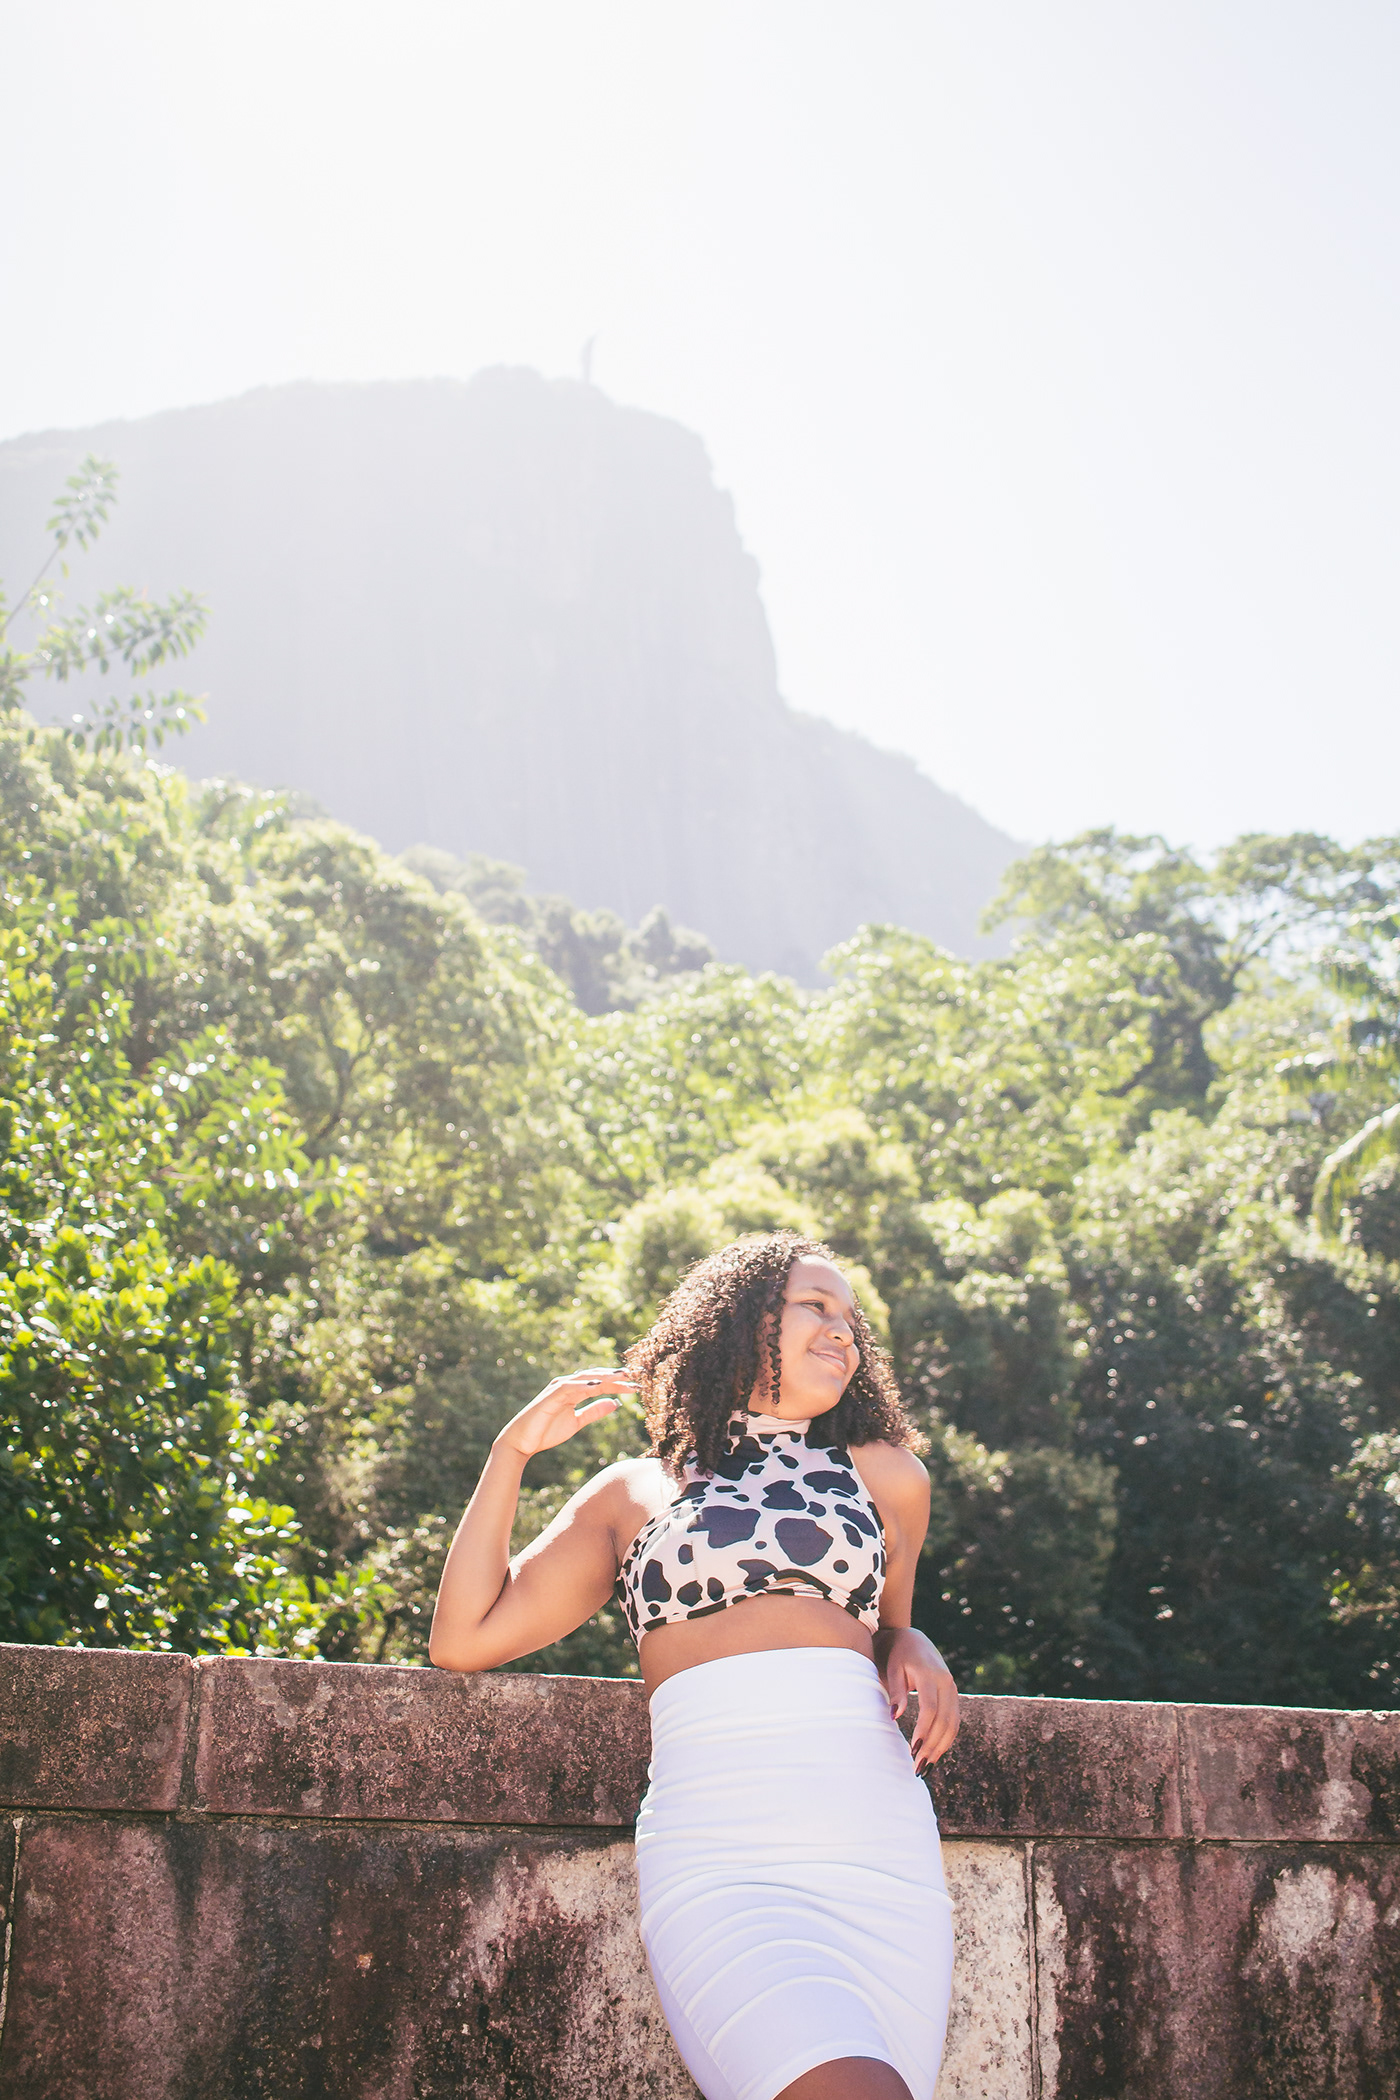 Brazil debutante delicadeza ensaio fotográfico lightroom parque lage Photography  photoshoot portrait Rio de Janeiro